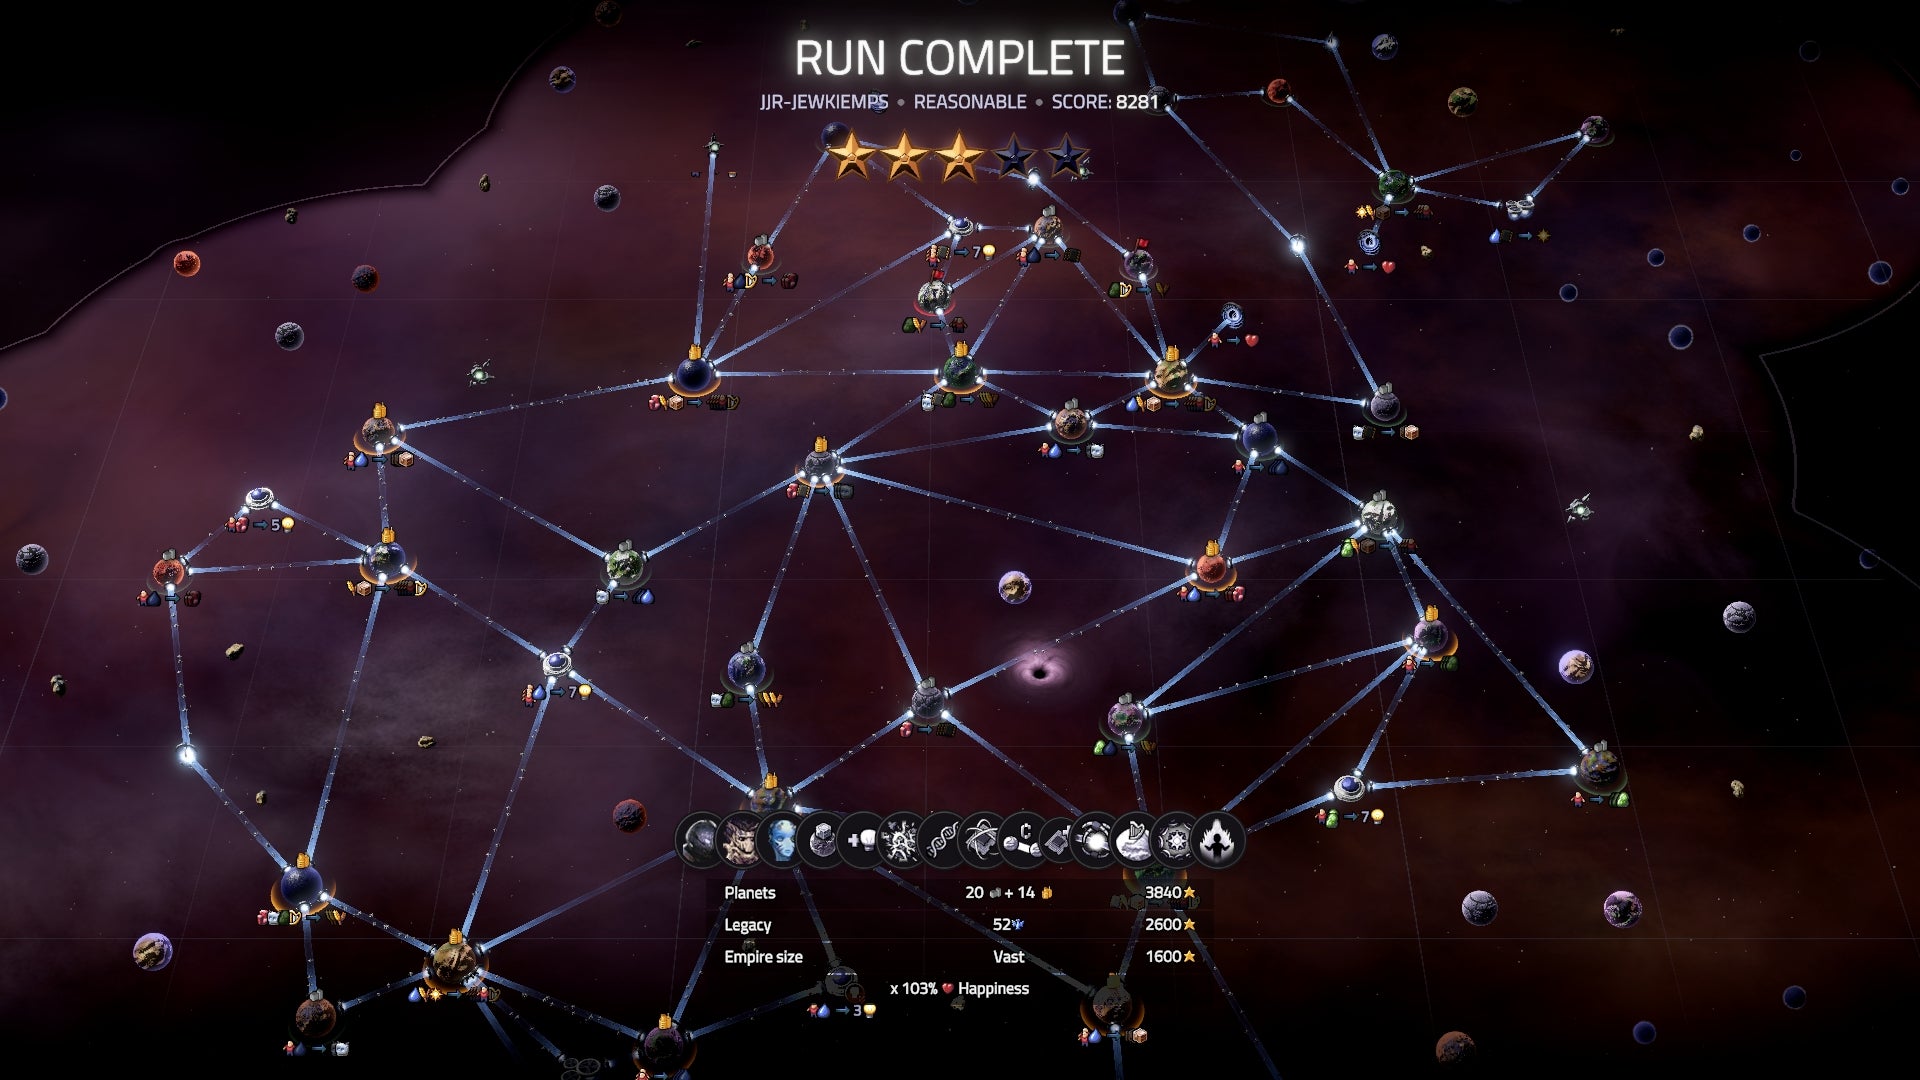 Slipways game screenshot of completed run